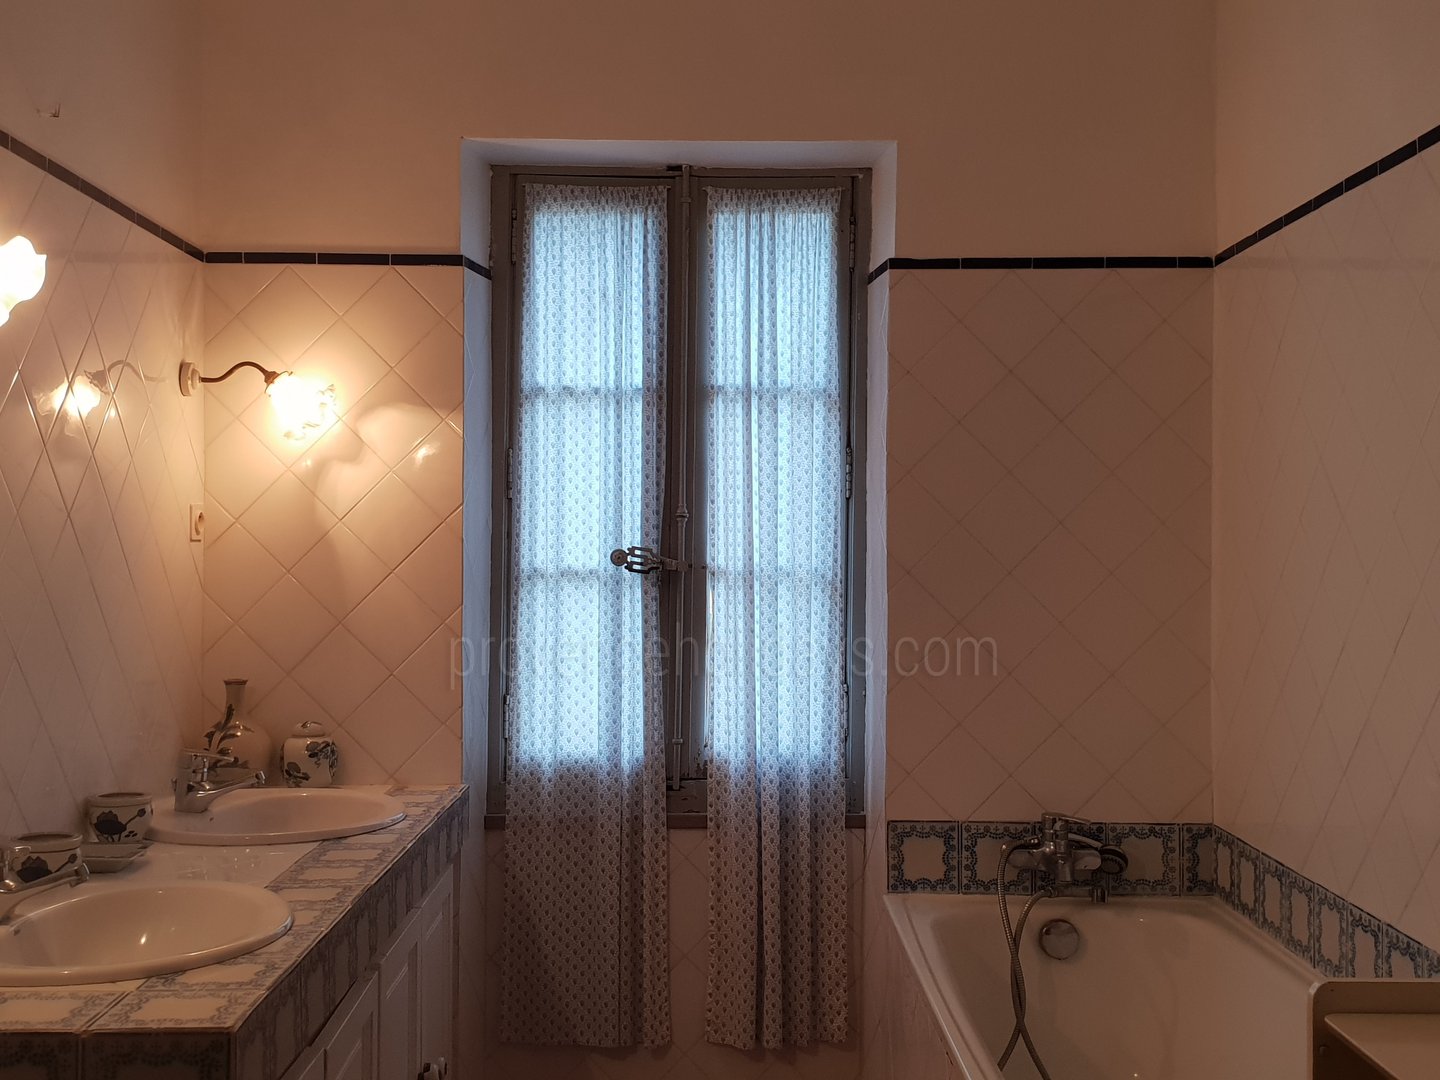 45 - Chez Christelle: Villa: Bathroom